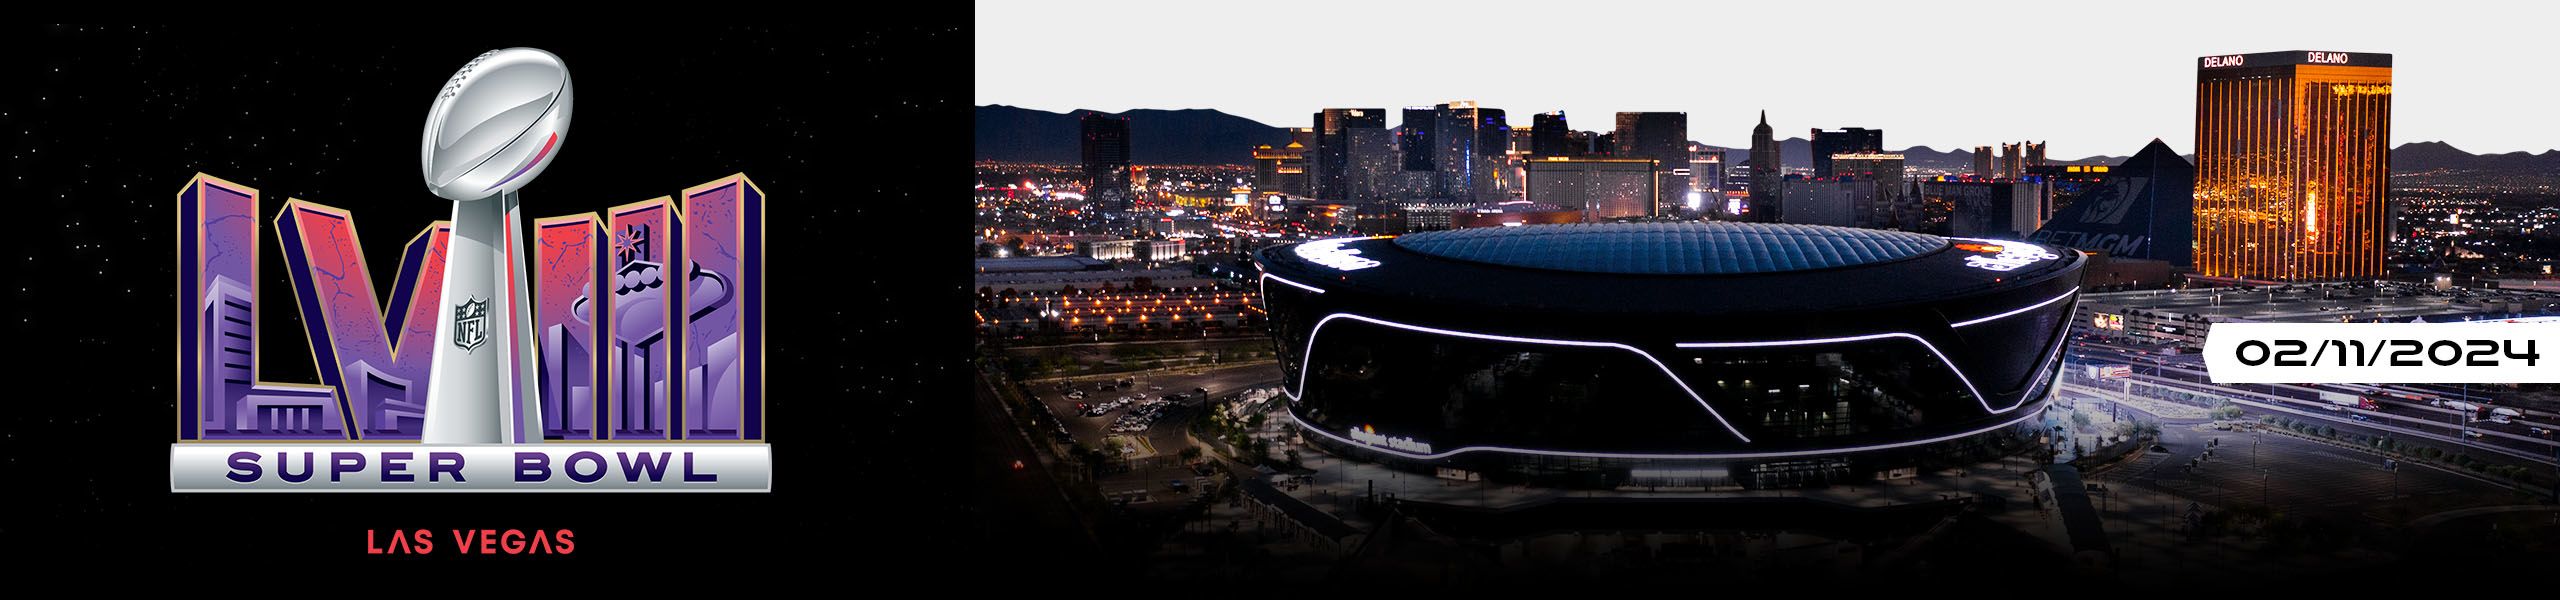 Las Vegas Raiders Official Team Website